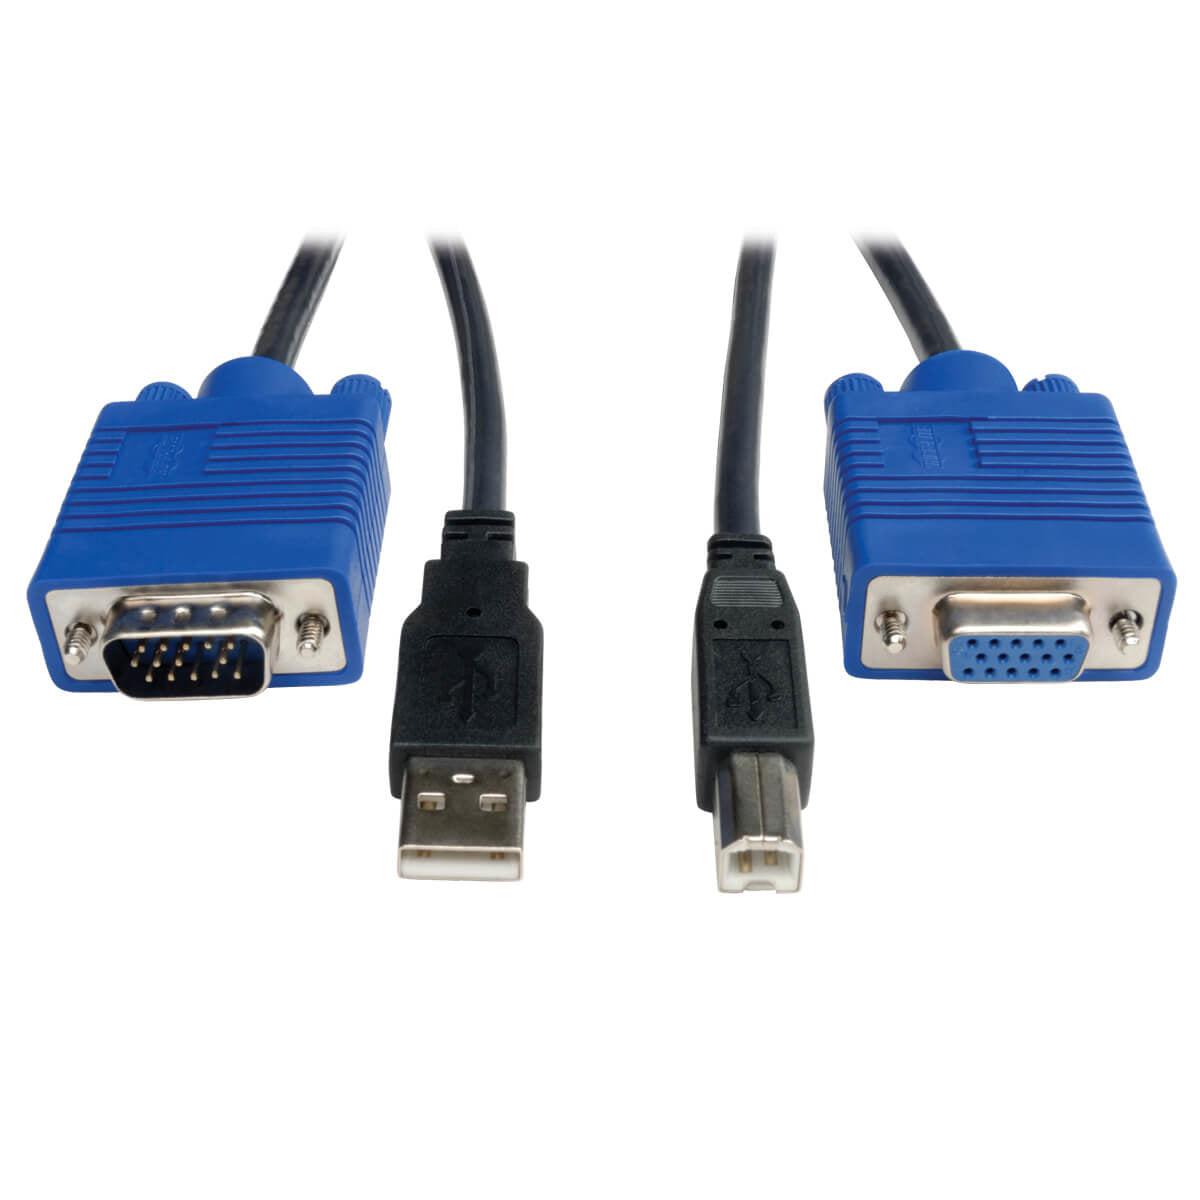 Tripp Lite P758-010 Usb Cable Kit For Kvm Switch B006-Vu4-R, 10 Ft. (3.05 M)